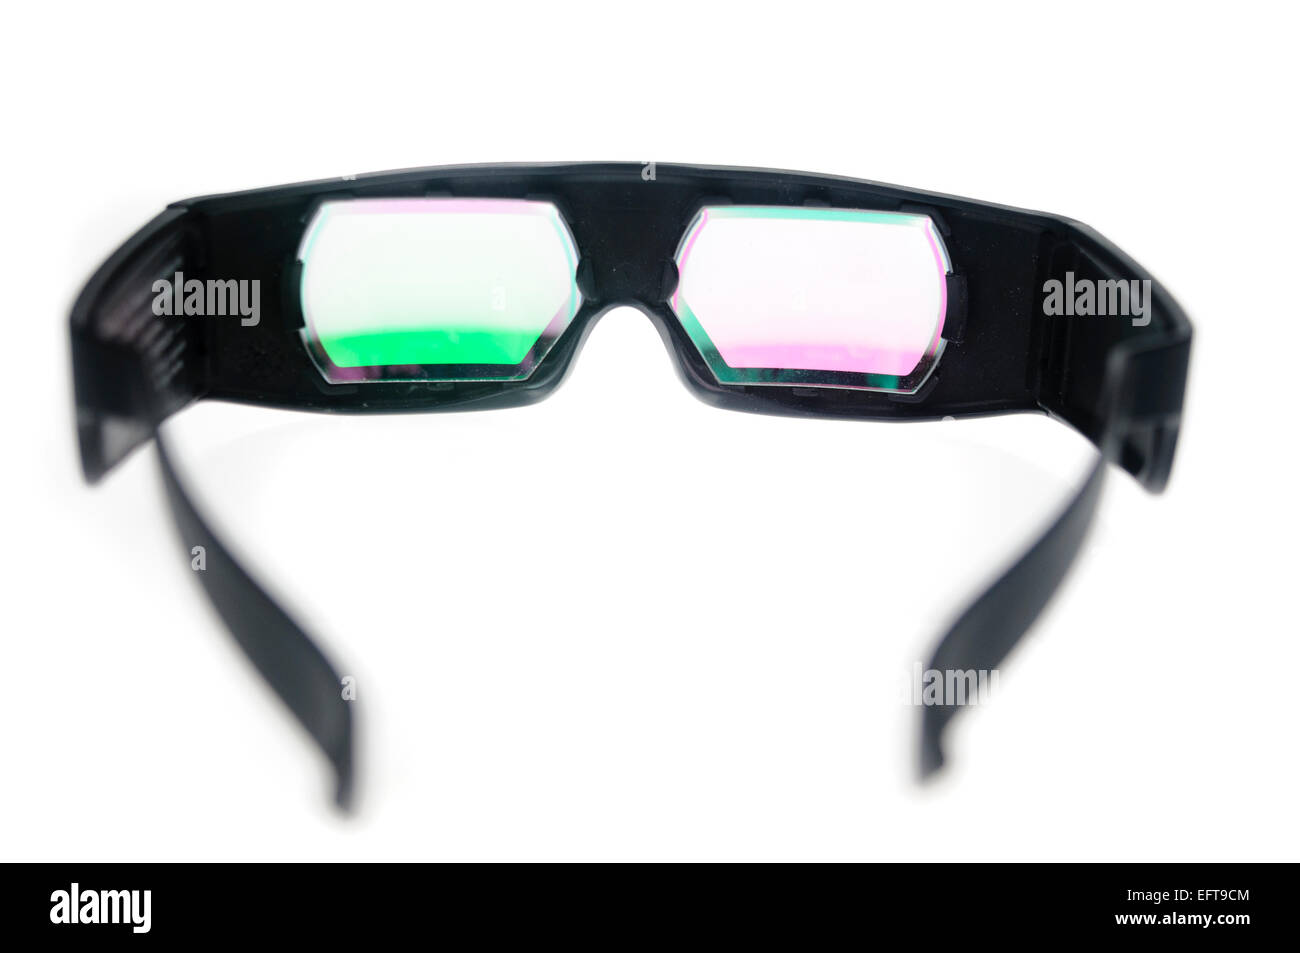 Dolby Digital Cinema 3D glasses Stock Photo